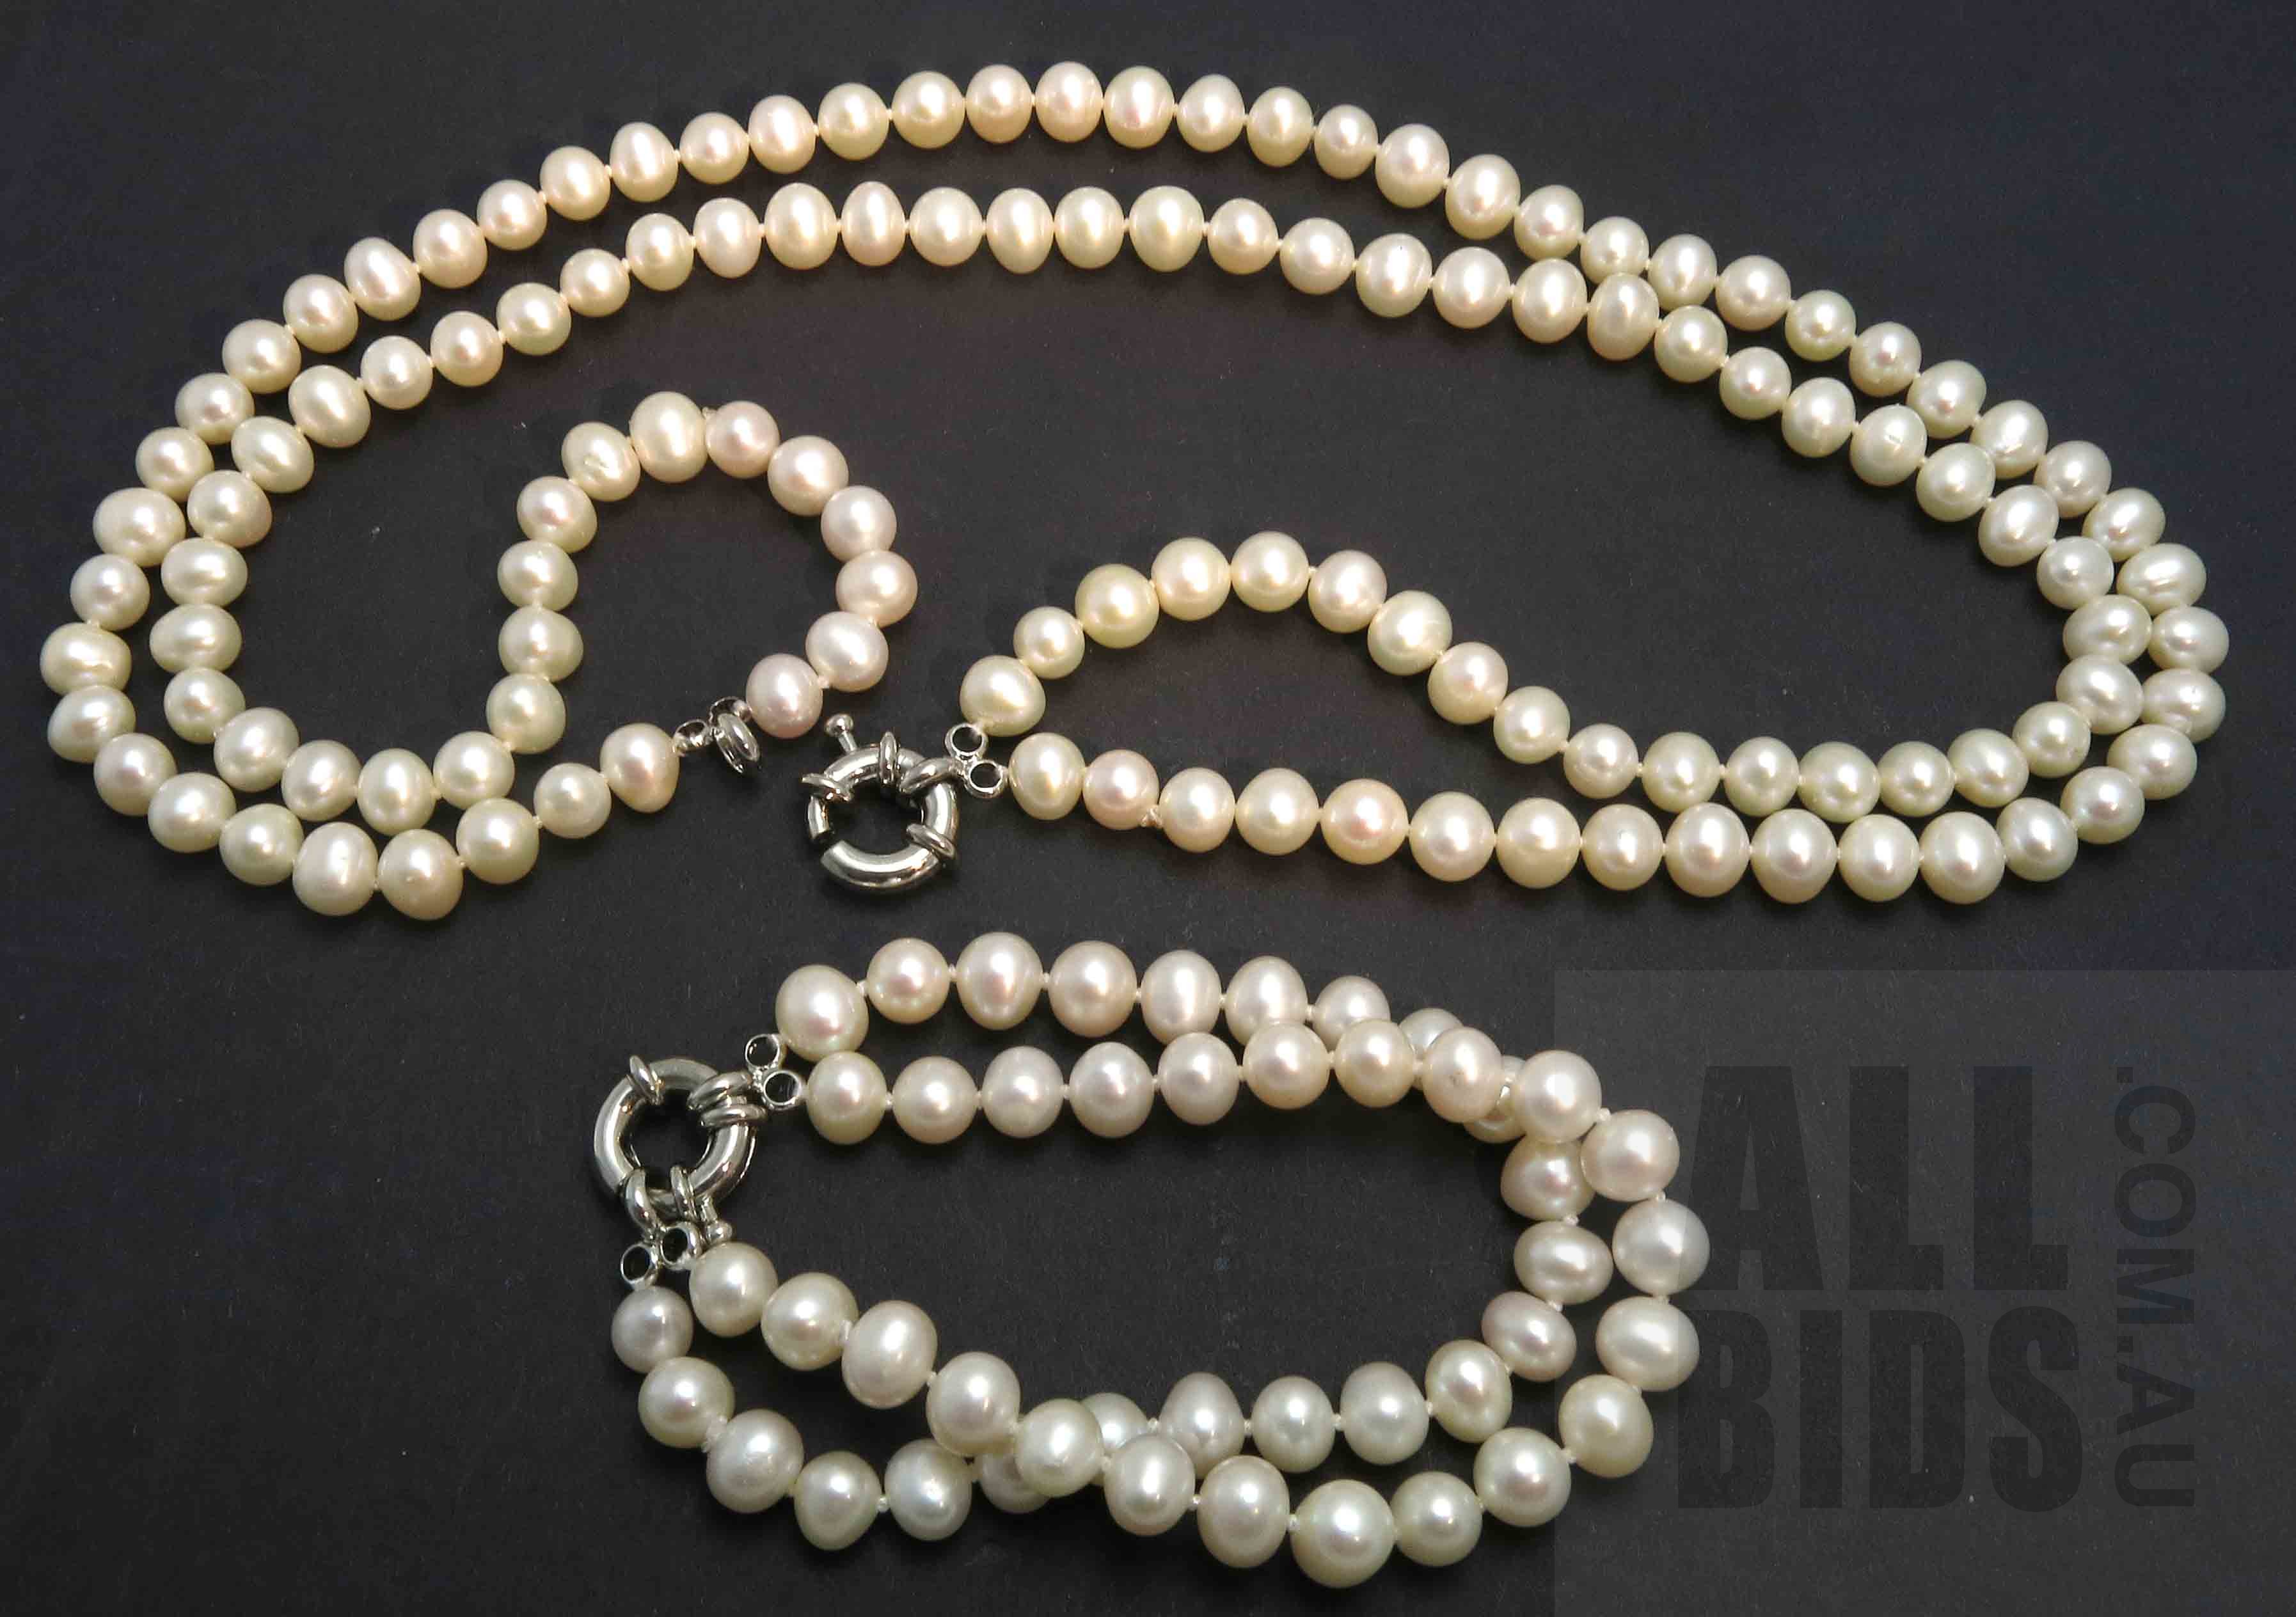 Freshwater Pearl Necklace Bracelet - Lot 1233412 | ALLBIDS